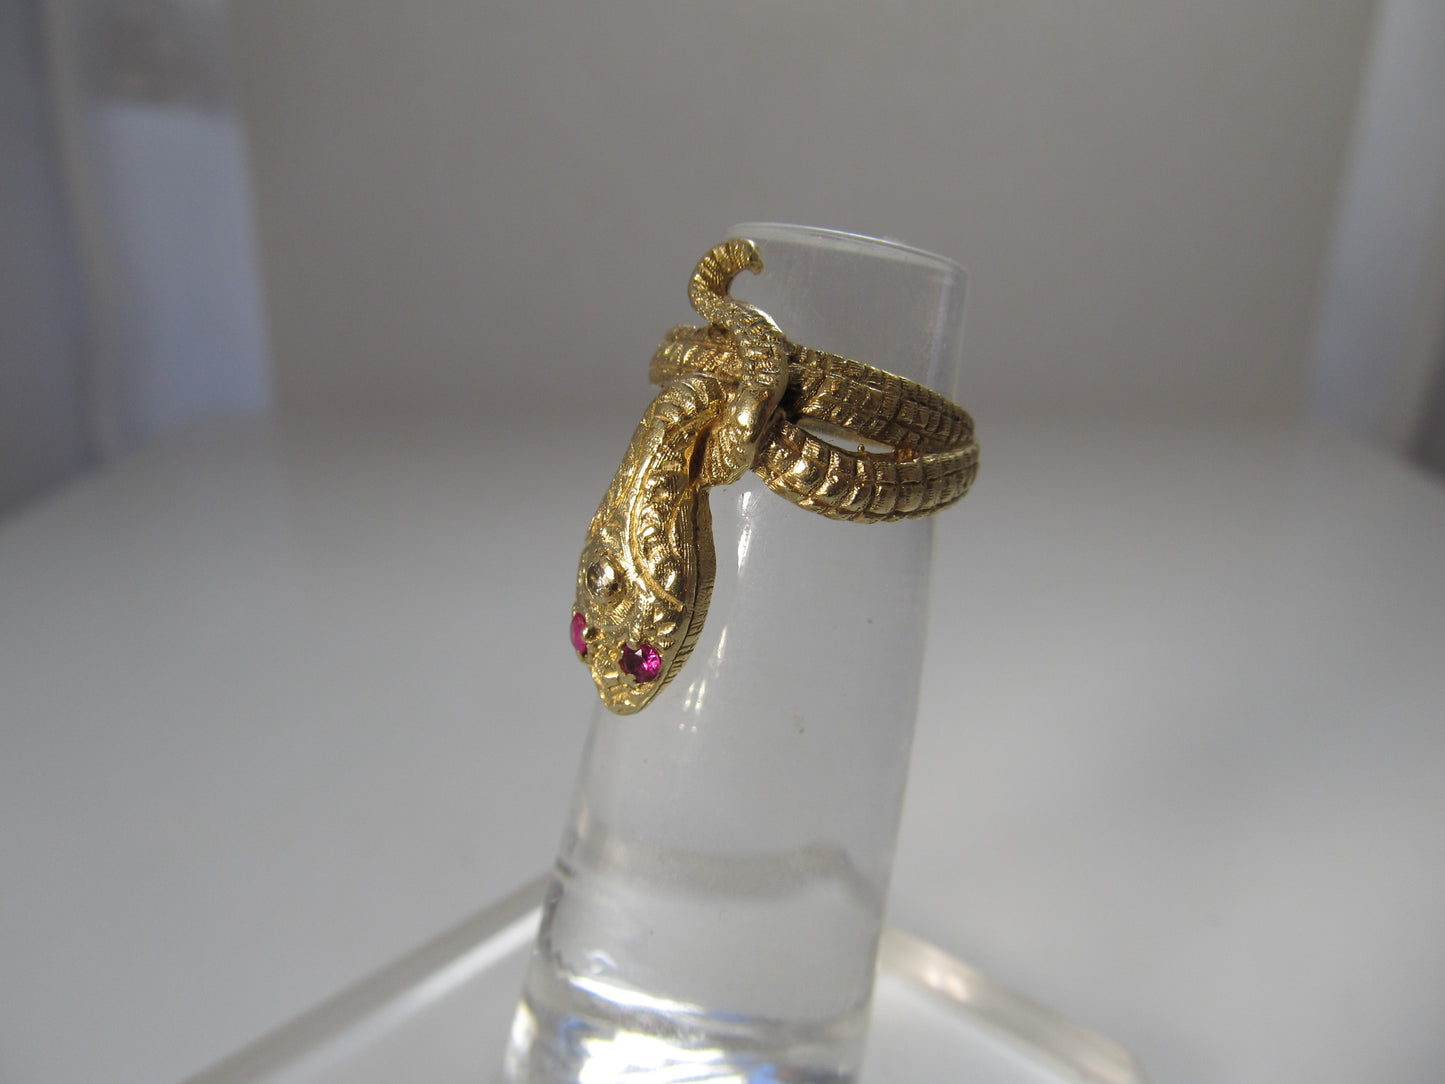 Vintage ruby eyed snake ring